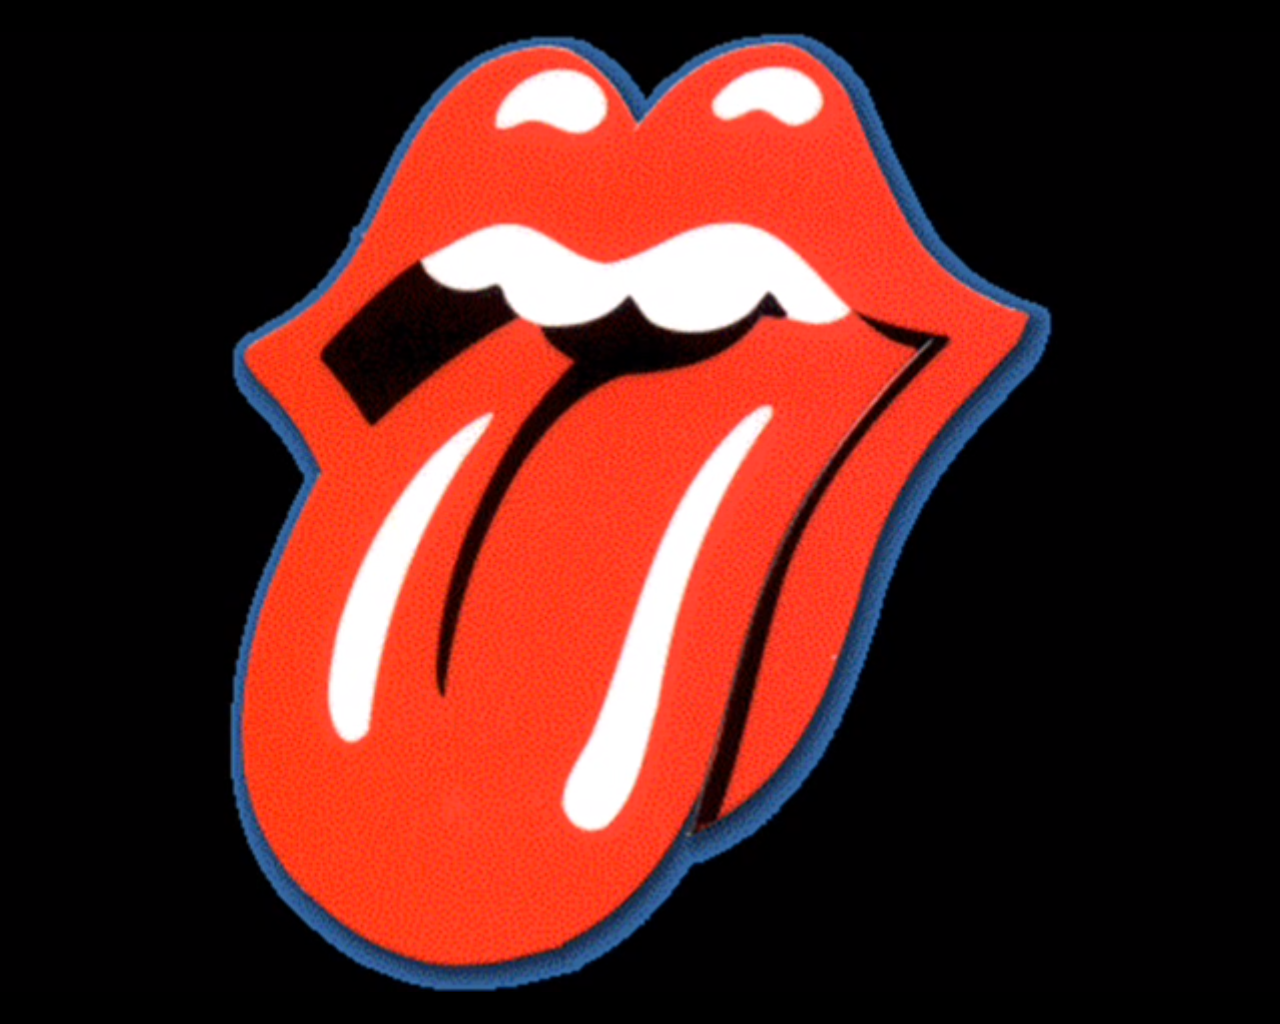 Rolling Stones логотип. Стоп для Роллинг стоунз. Роллинг стоунз арт. Sticky fingers the Rolling Stones. Rolling stones song stoned